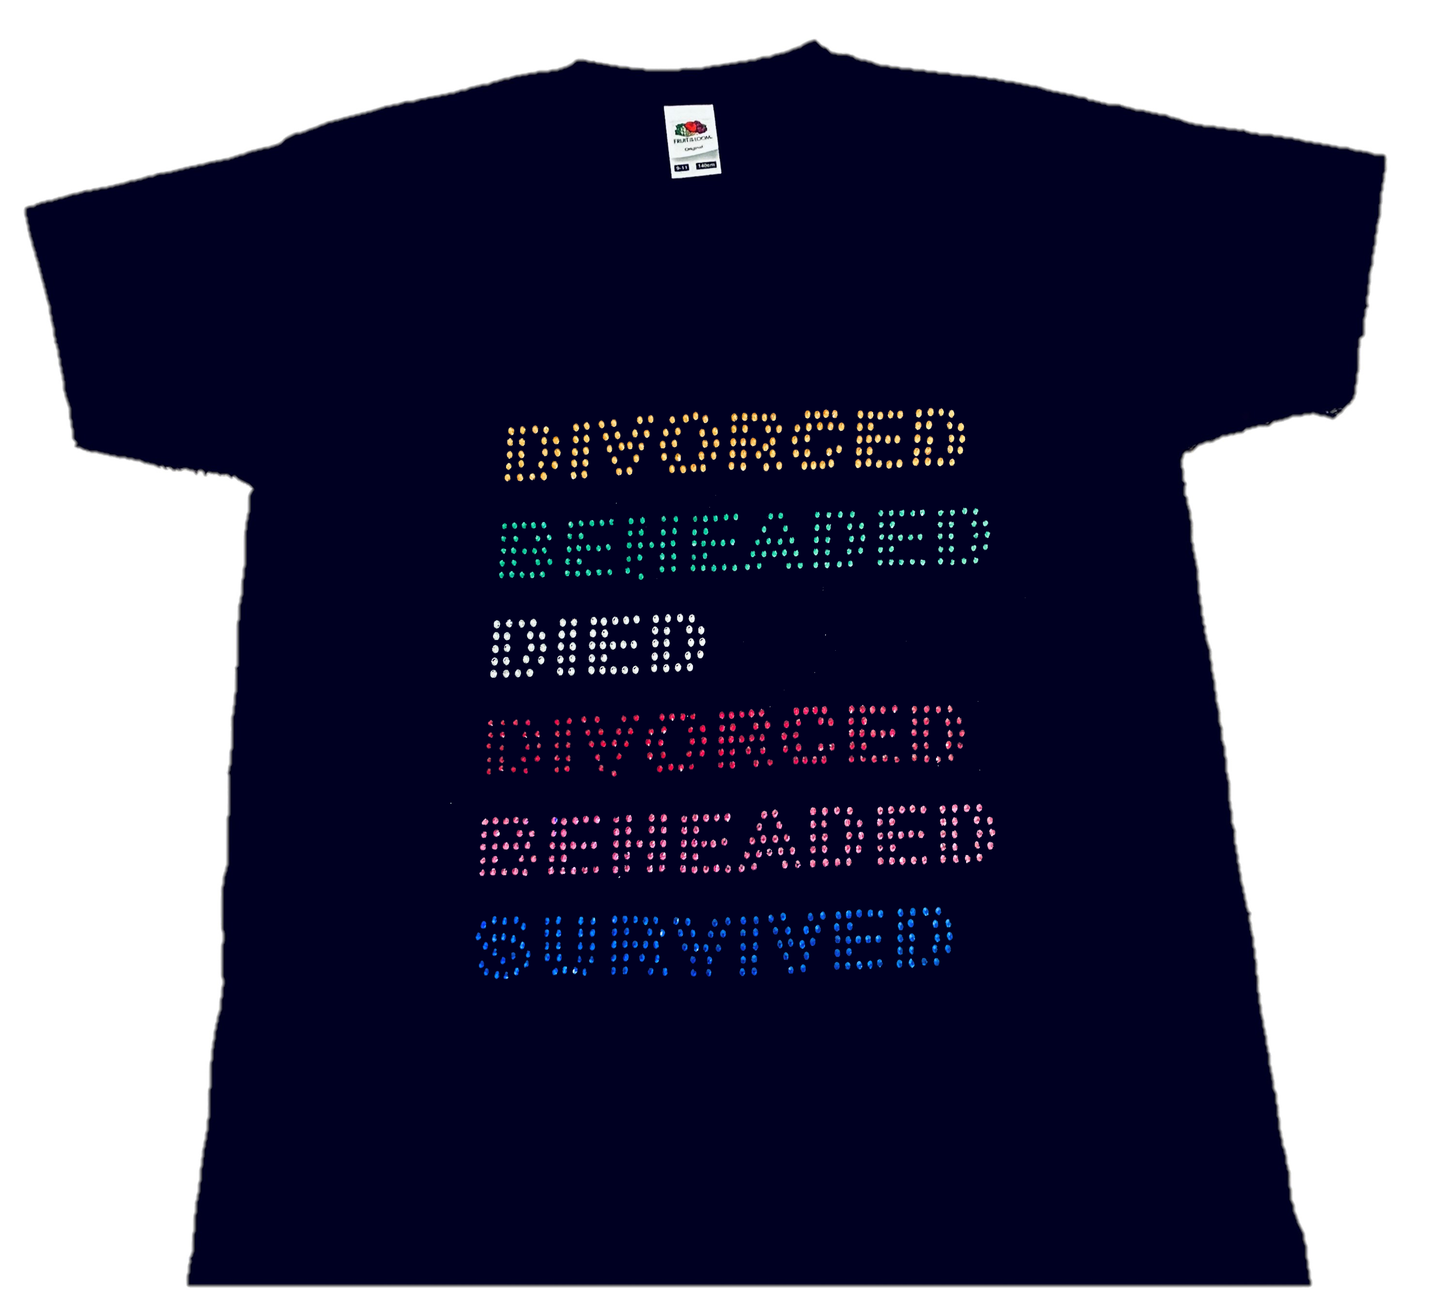 Six Divorced Beheaded Survived T-shirt Children's